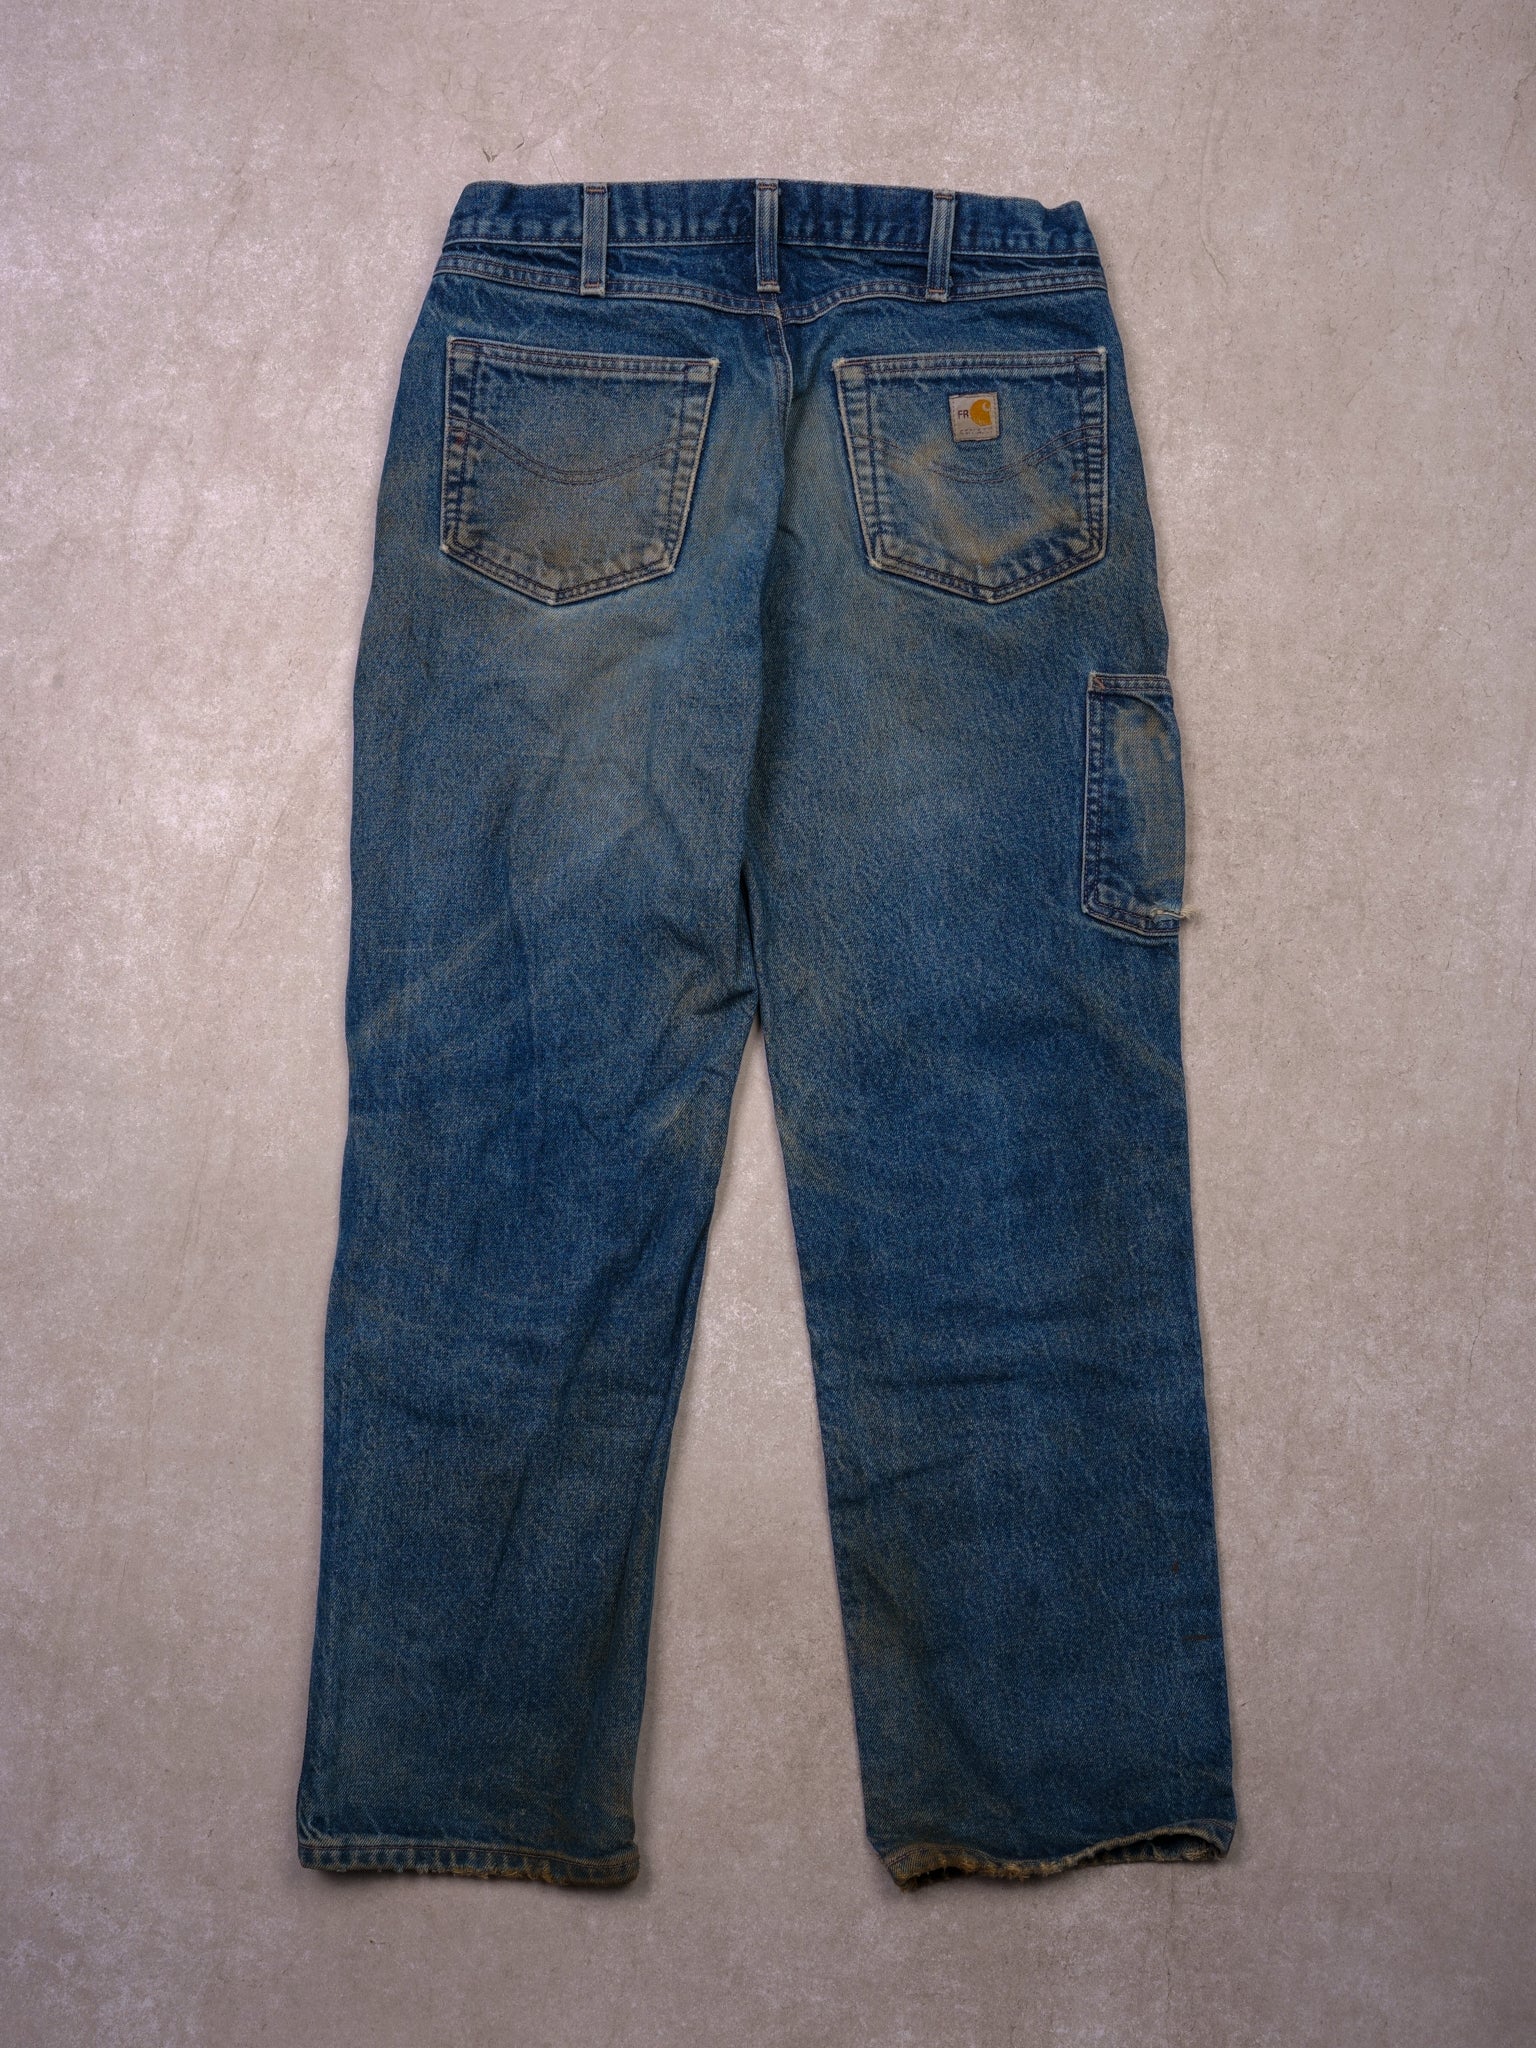 Vintage 90s Light Blue Denim Rare Carhartt Double Knee Carpenter Pants (34x30)